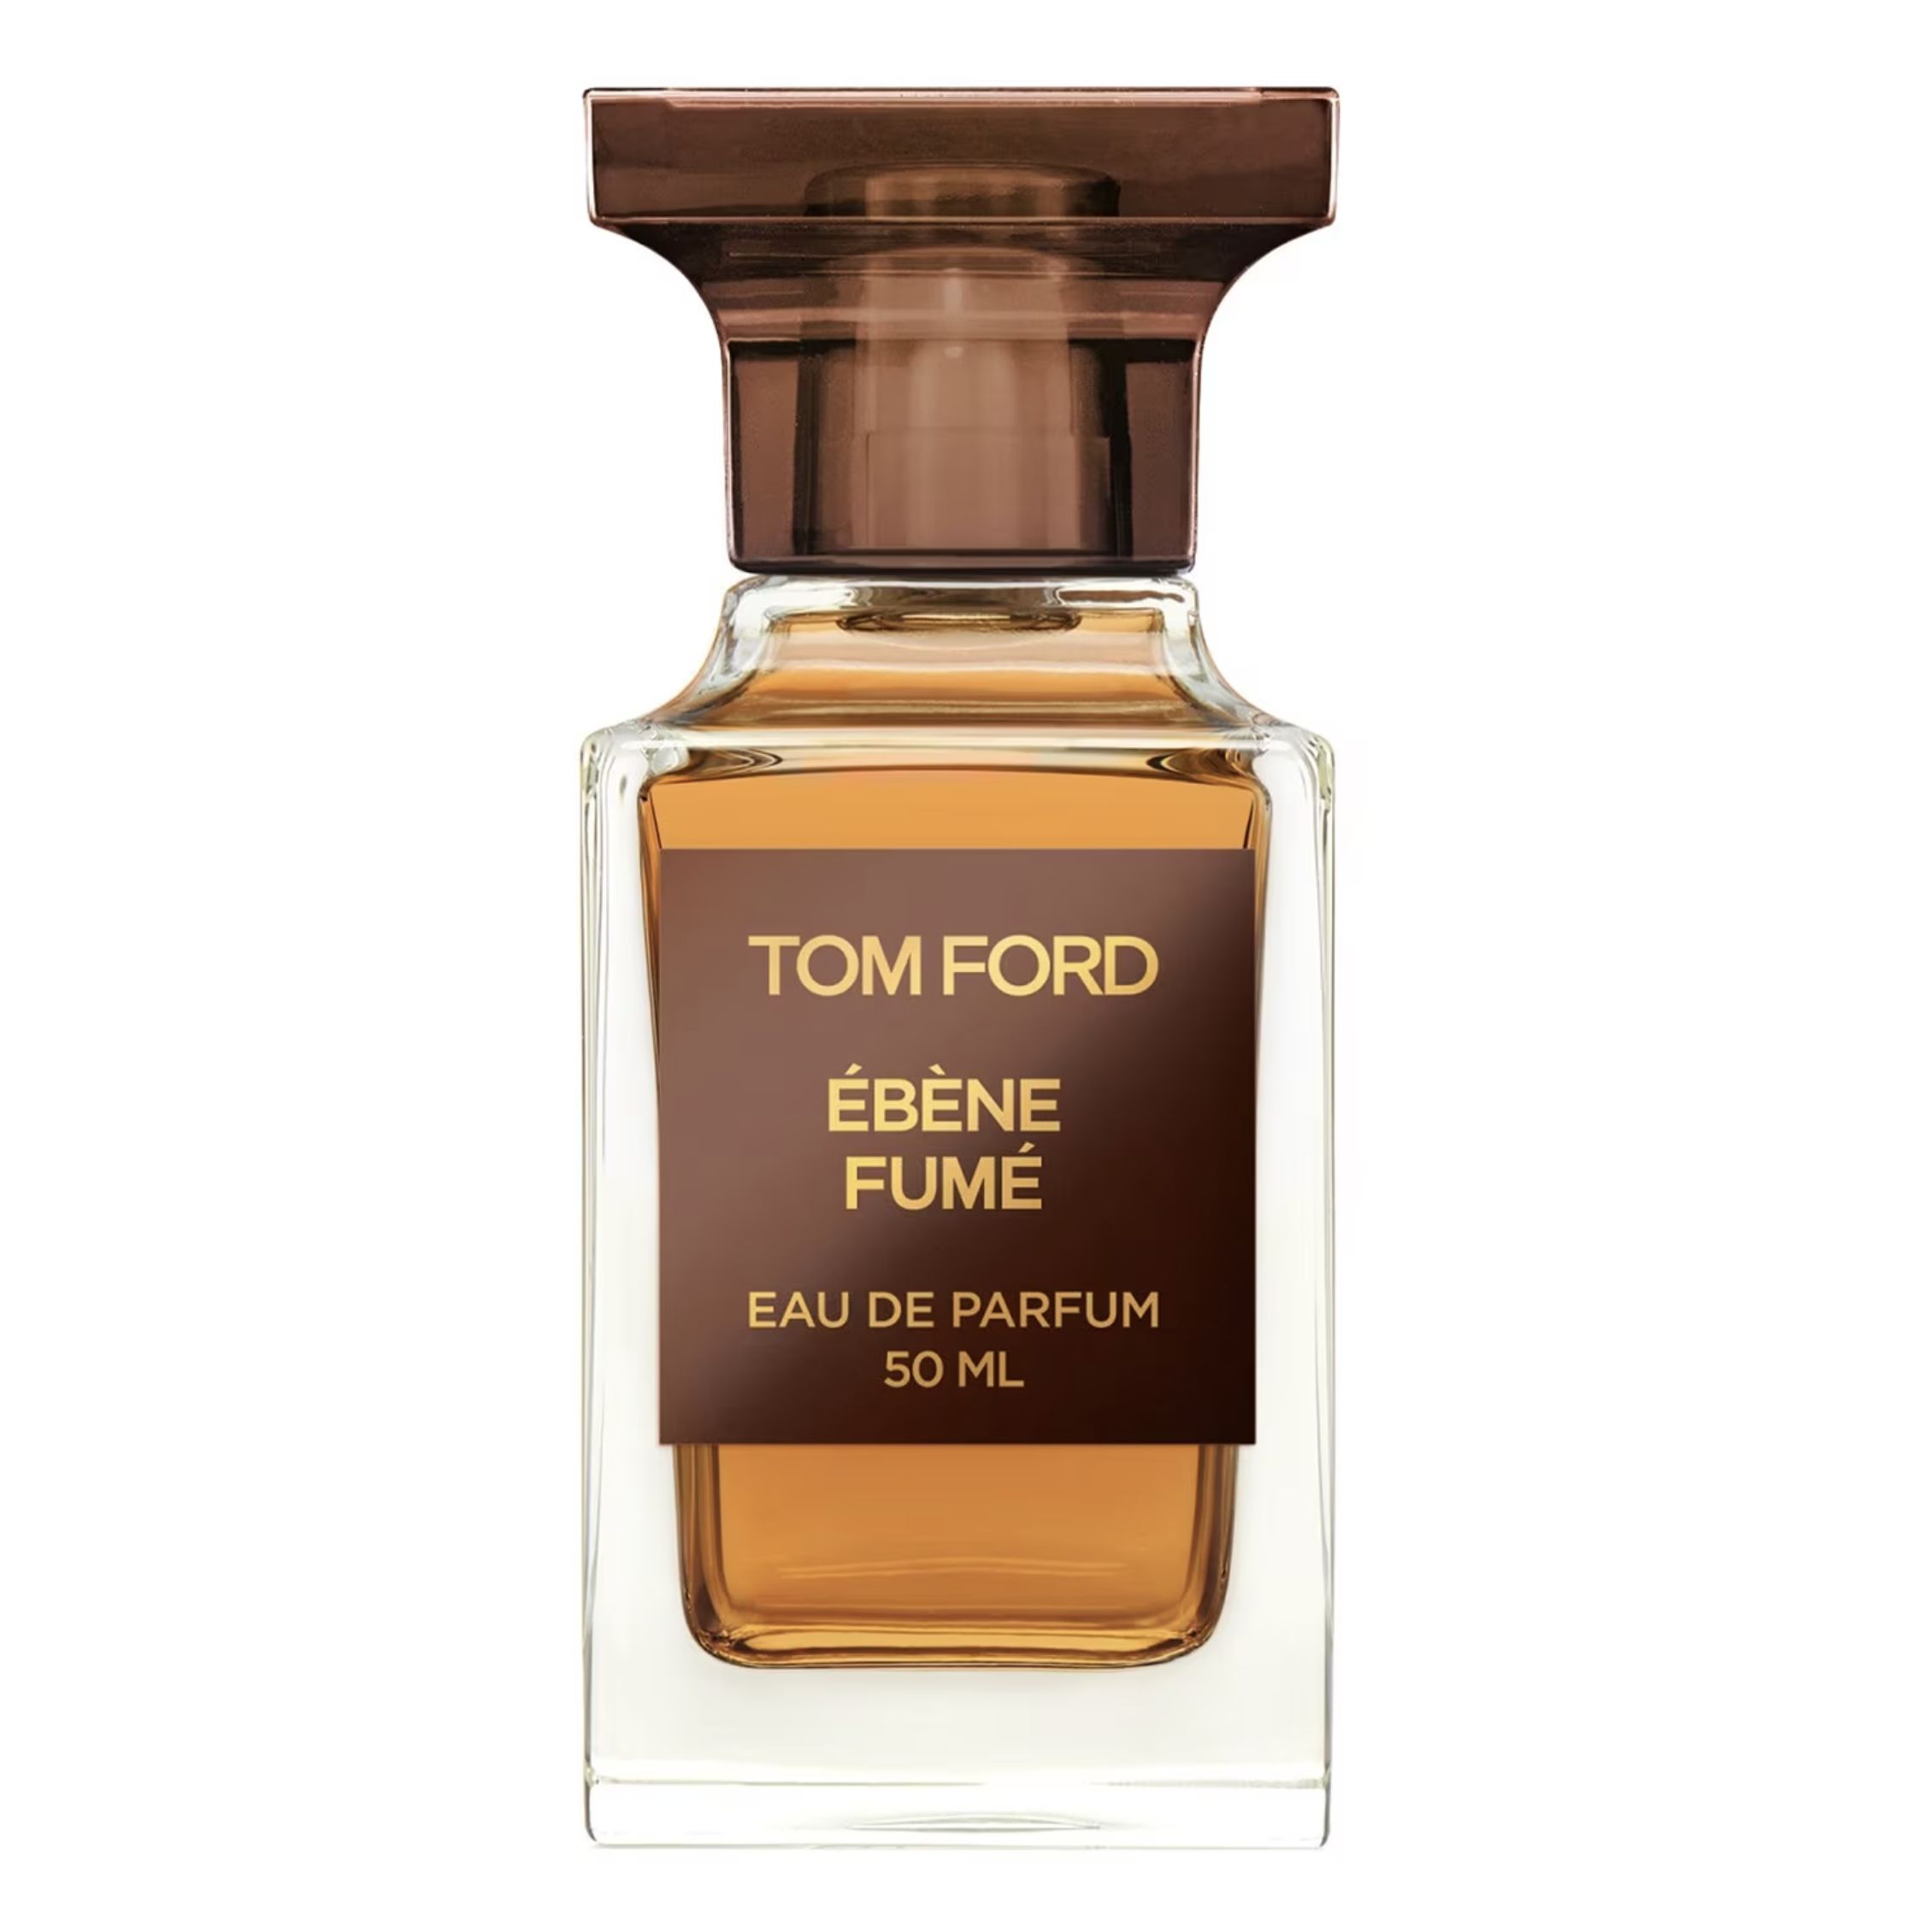 Том форд золотые духи. Tom Ford ebene fume. Ébène fumé Tom Ford 100 ml. Tom Ford ebene fume 100ml. Tom Ford Santal blush, 50 мл.